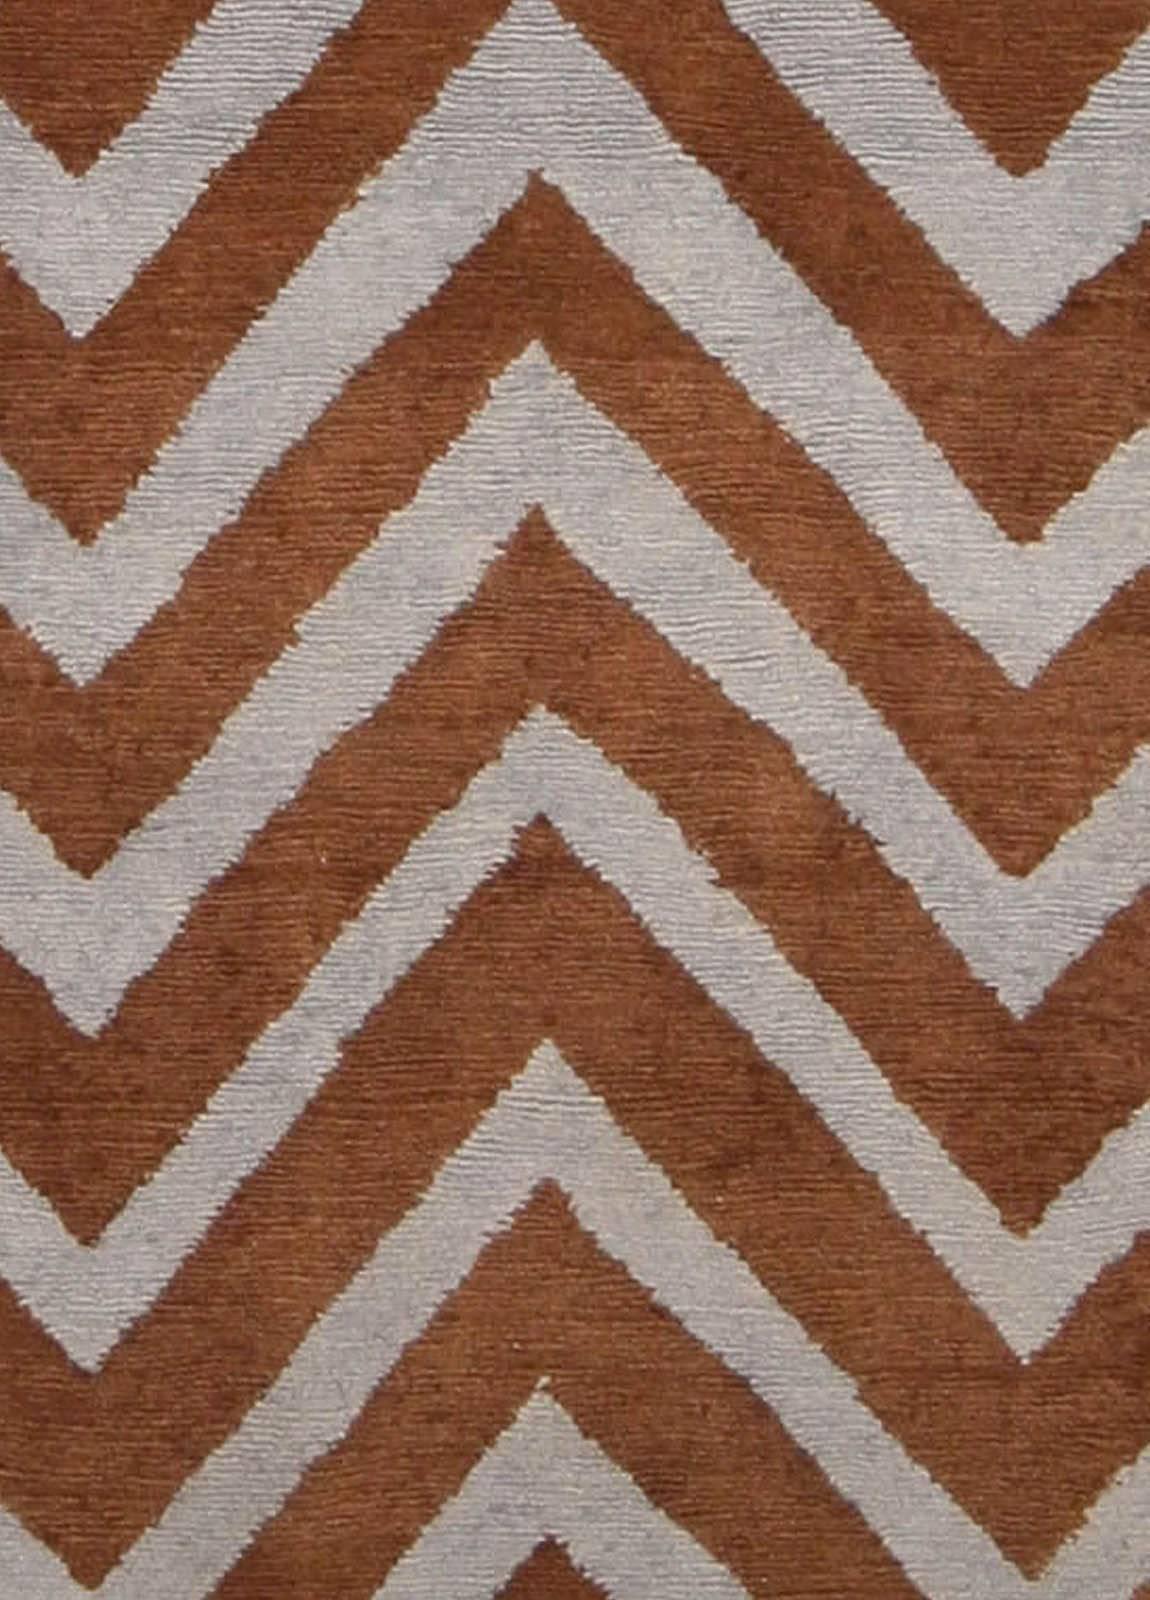 Modern SN1 zig-zag rug in gray and brown by Doris Leslie Blau
Size: 6'0